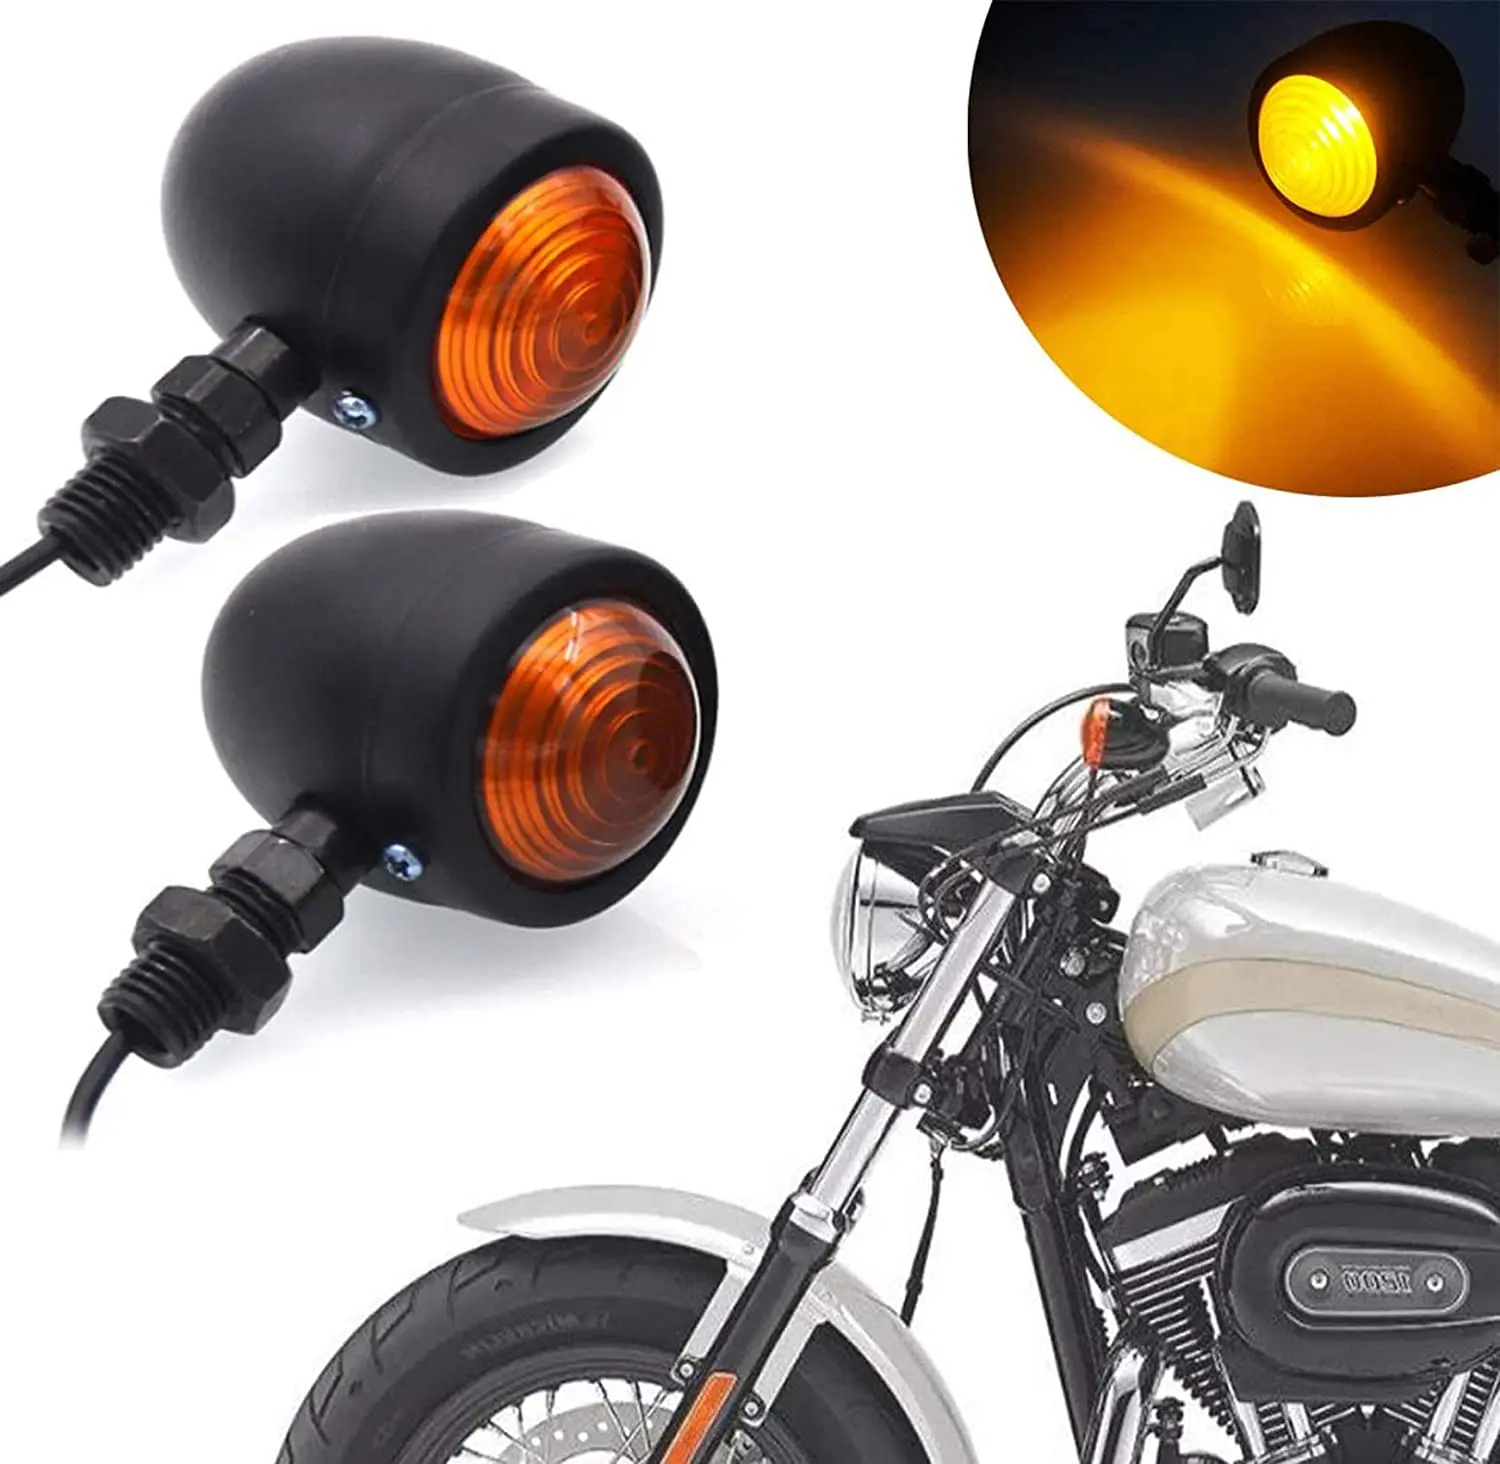 4x Motorcycle LED Turn Signal Lights 12V Smoke Lens Amber Yellow Lamp Universal Turn Signal Indicator Blinker for Honda Yamaha Harley Suzuki Kawasaki 